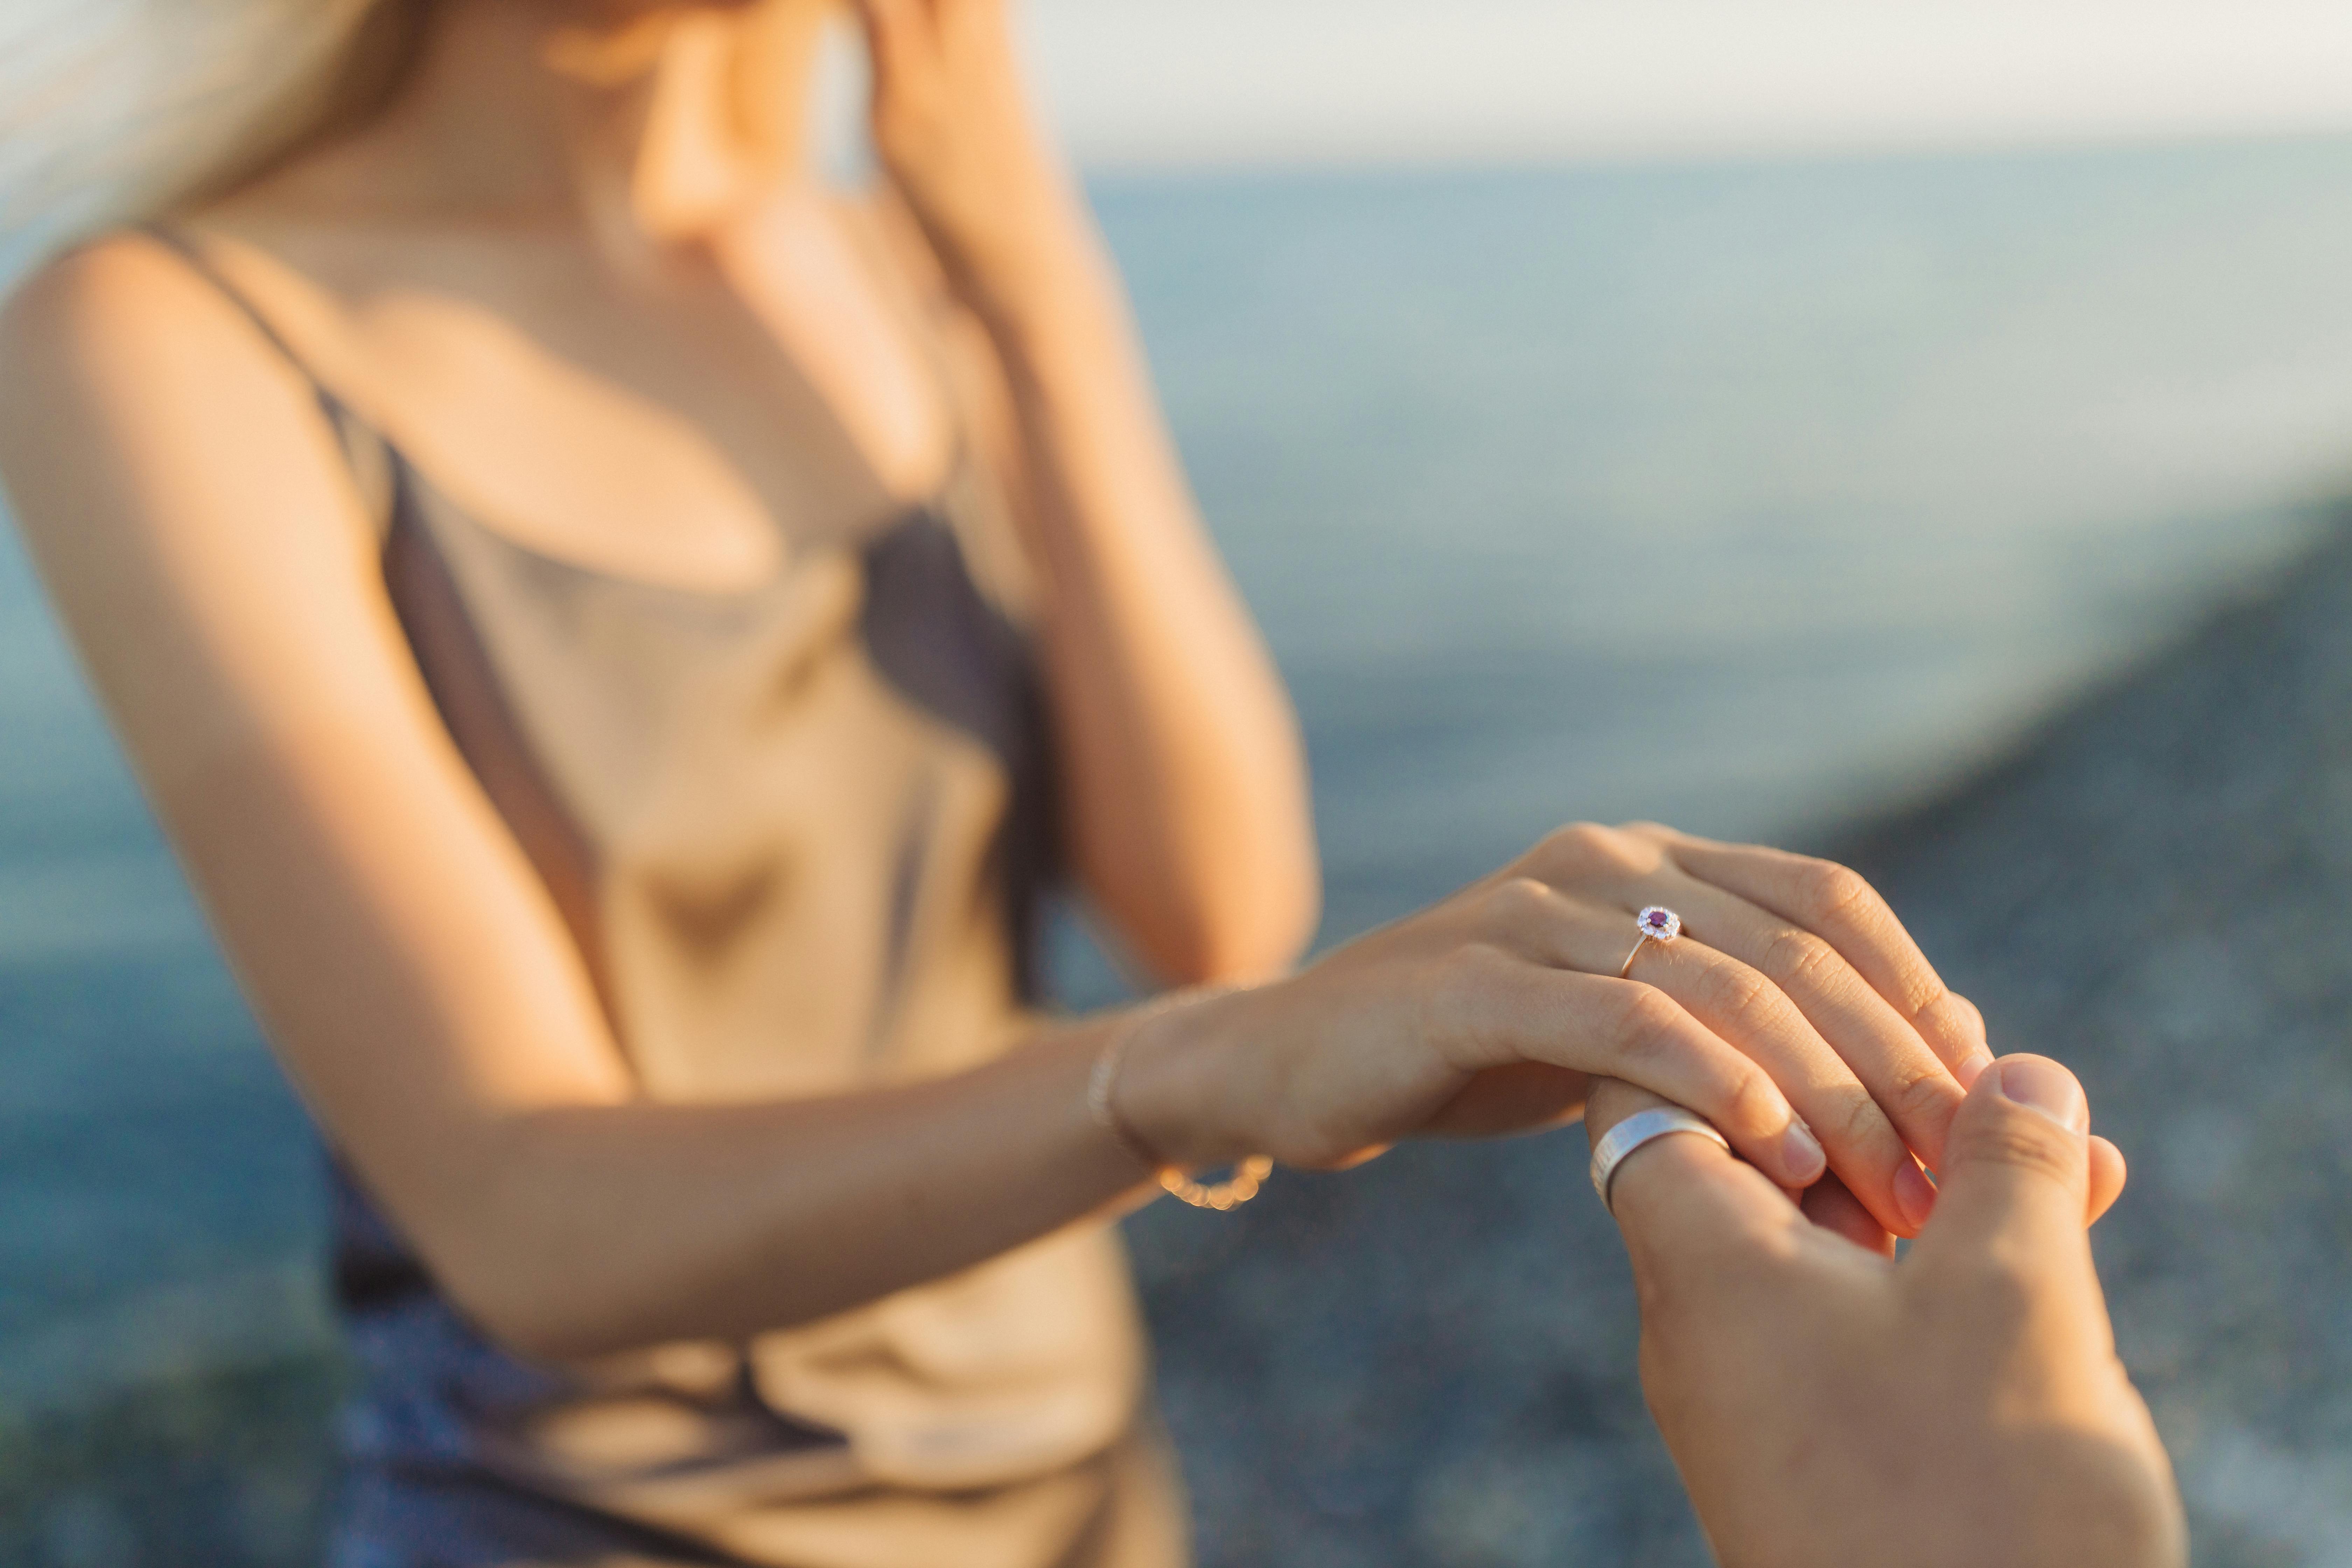 Propuesta de matrimonio con un bonito anillo | Fuente: Pexels